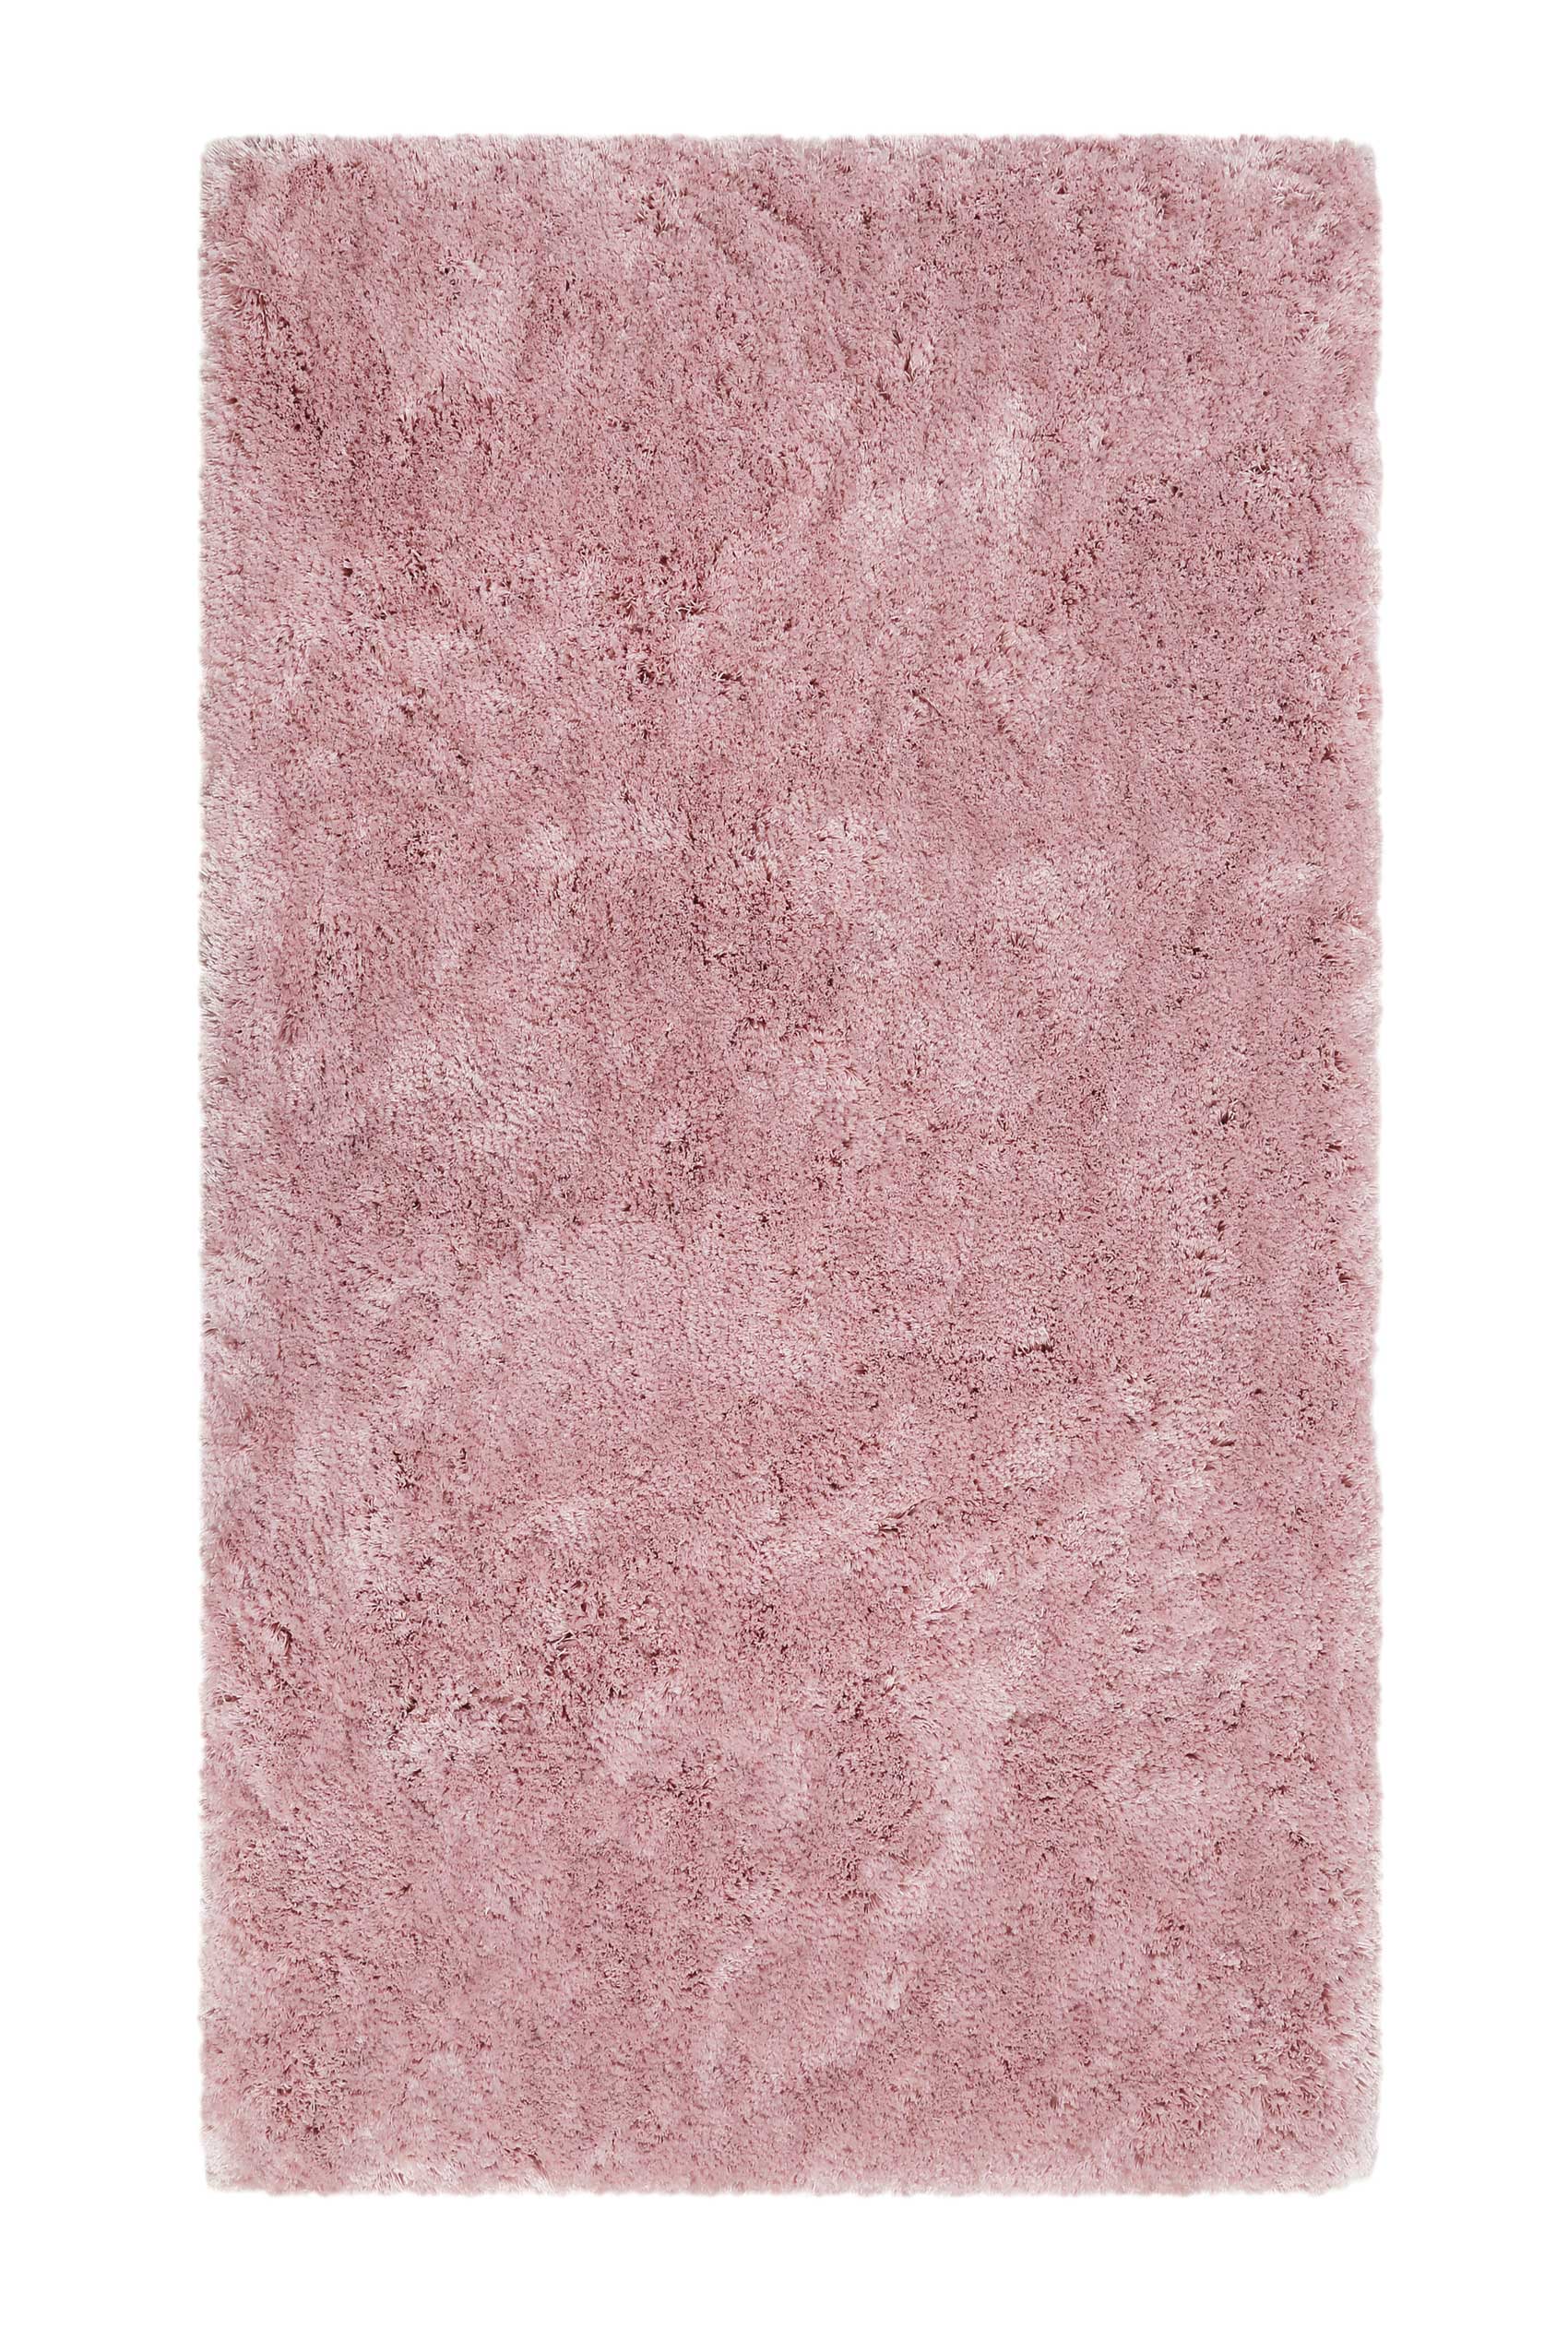 Tapis de bain microfibre antidérapant rose 70x120